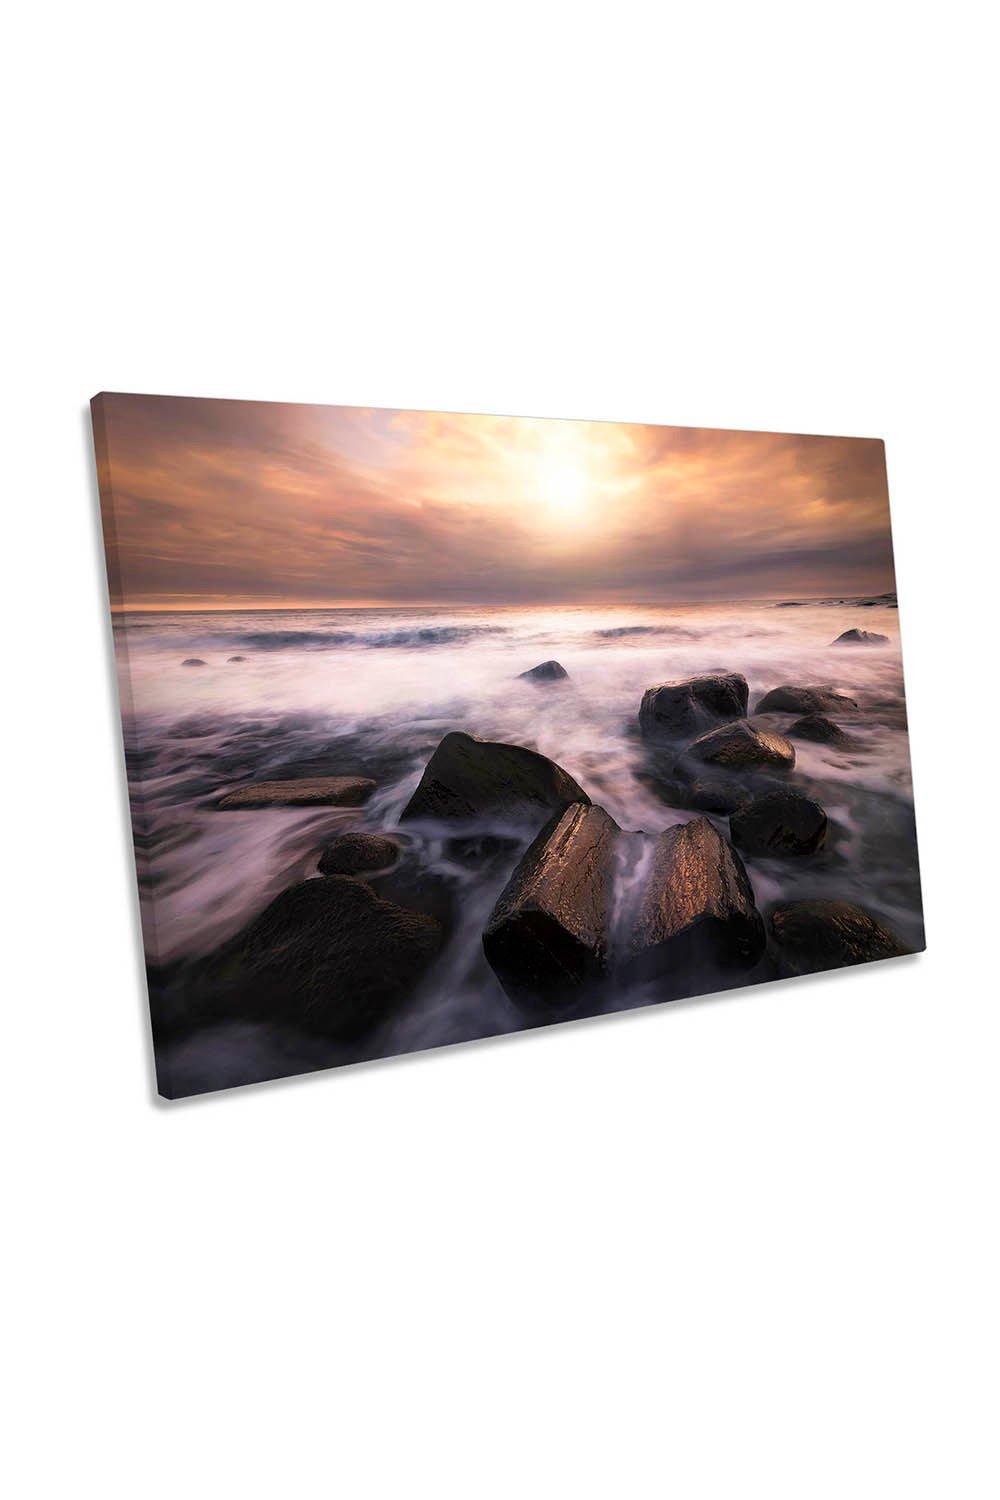 Ocean Trance Sunset Beach Seascape Canvas Wall Art Picture Print